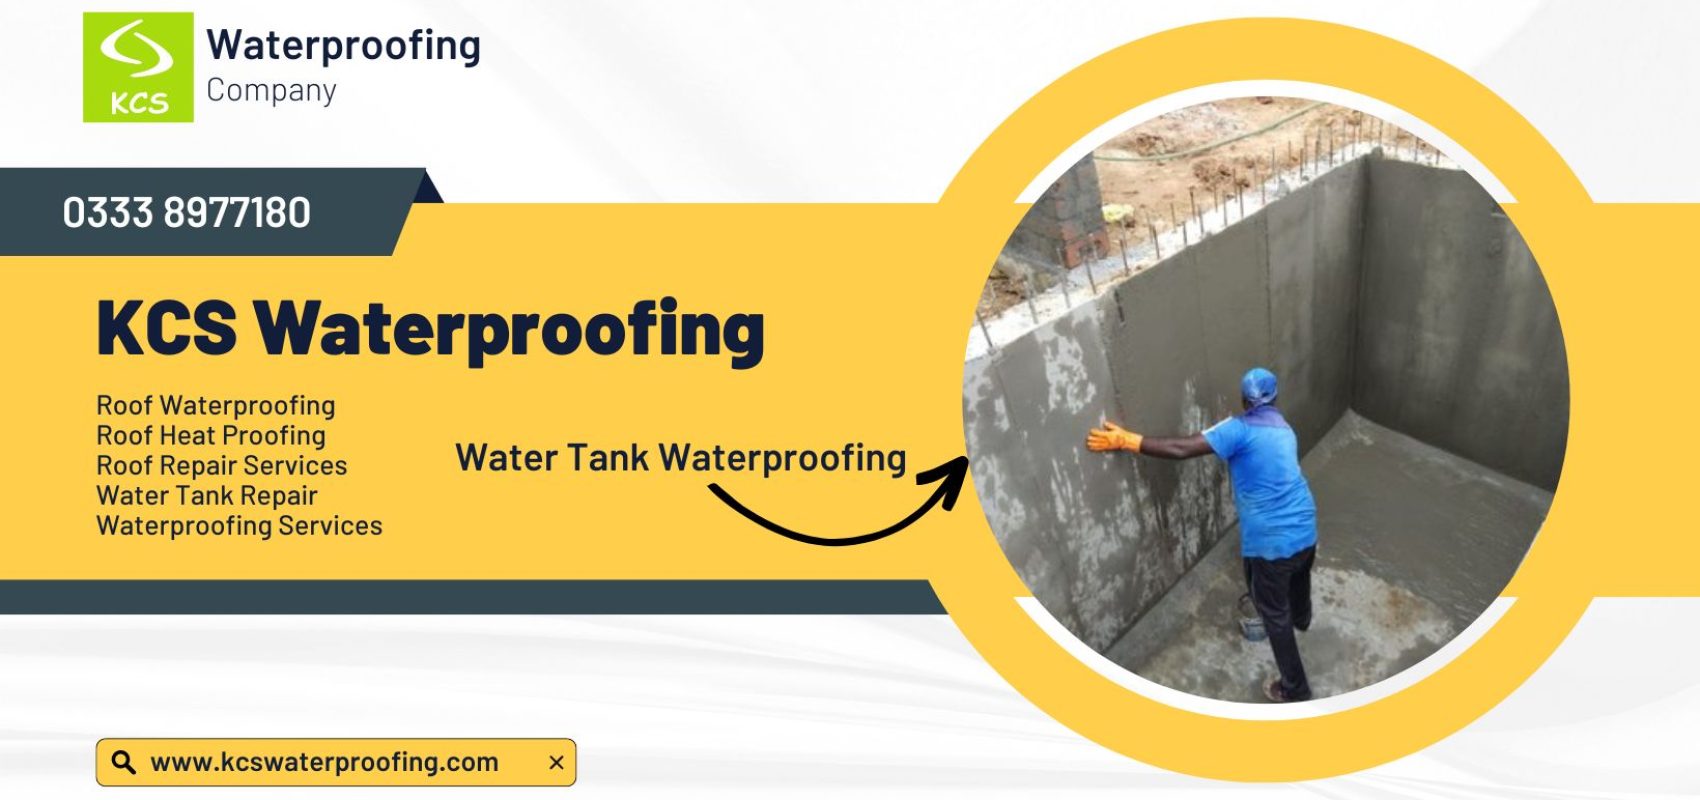 KCS Water Tank Waterproofing